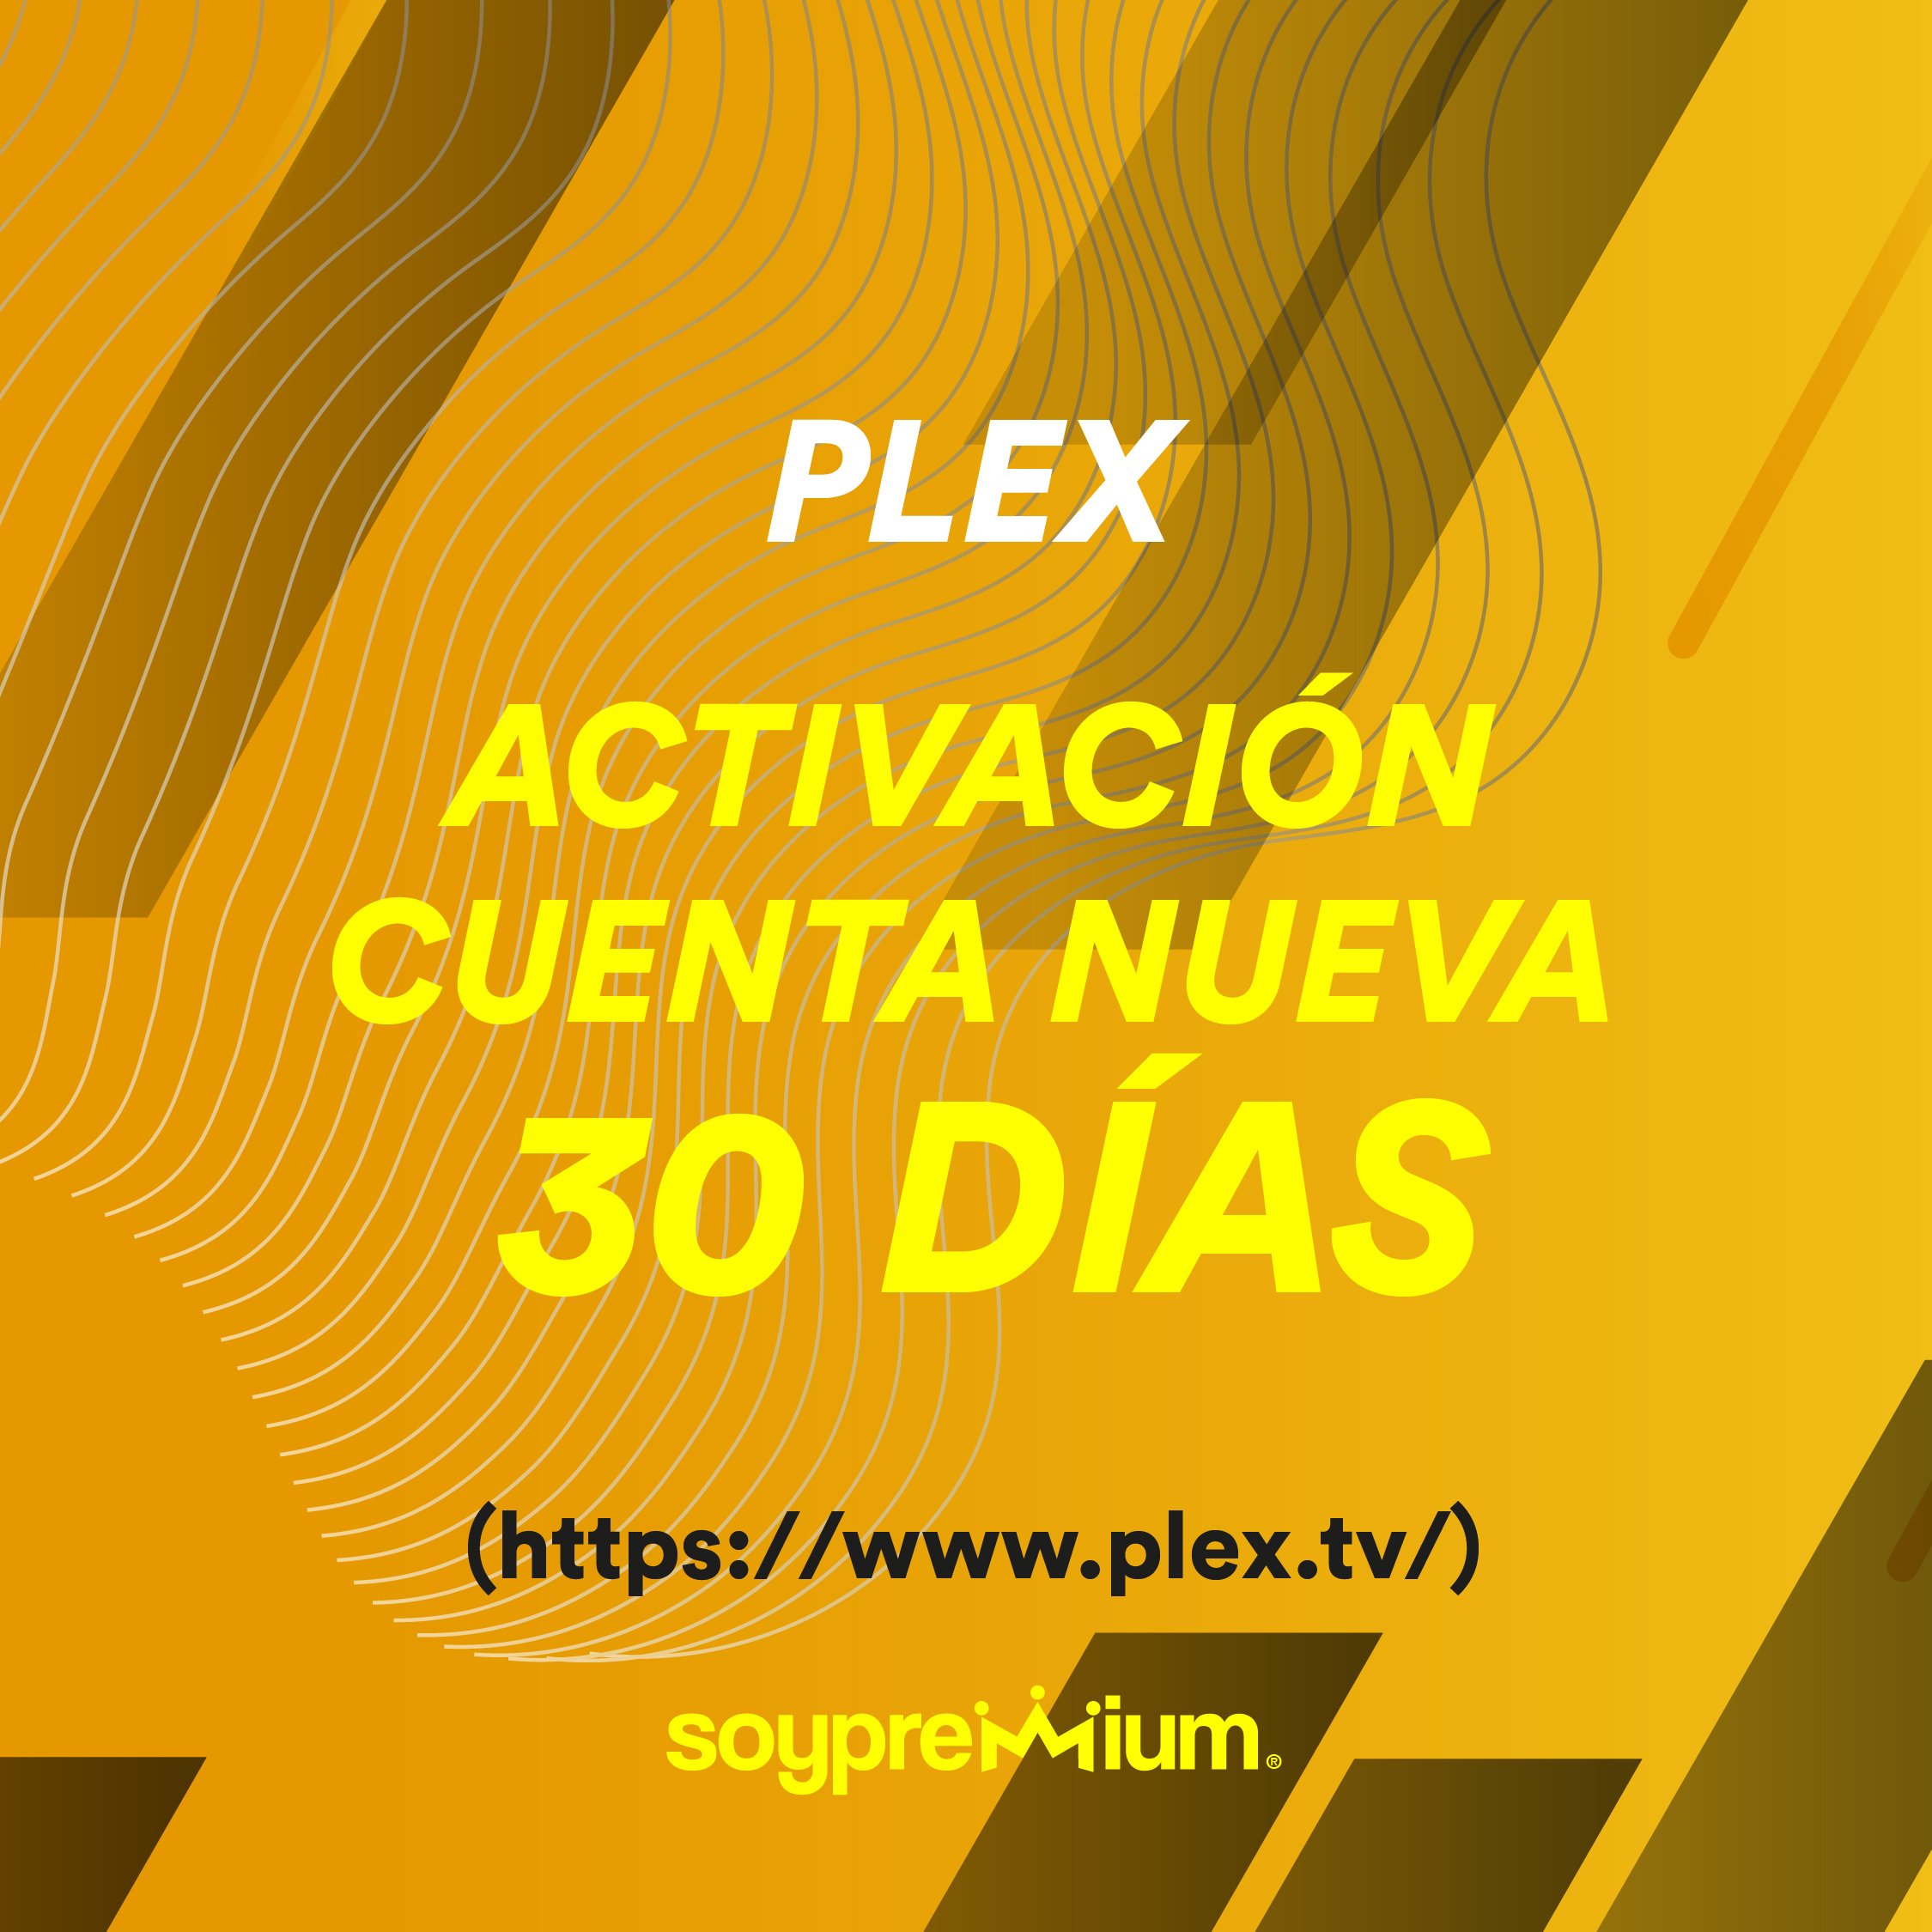 Pago Plex